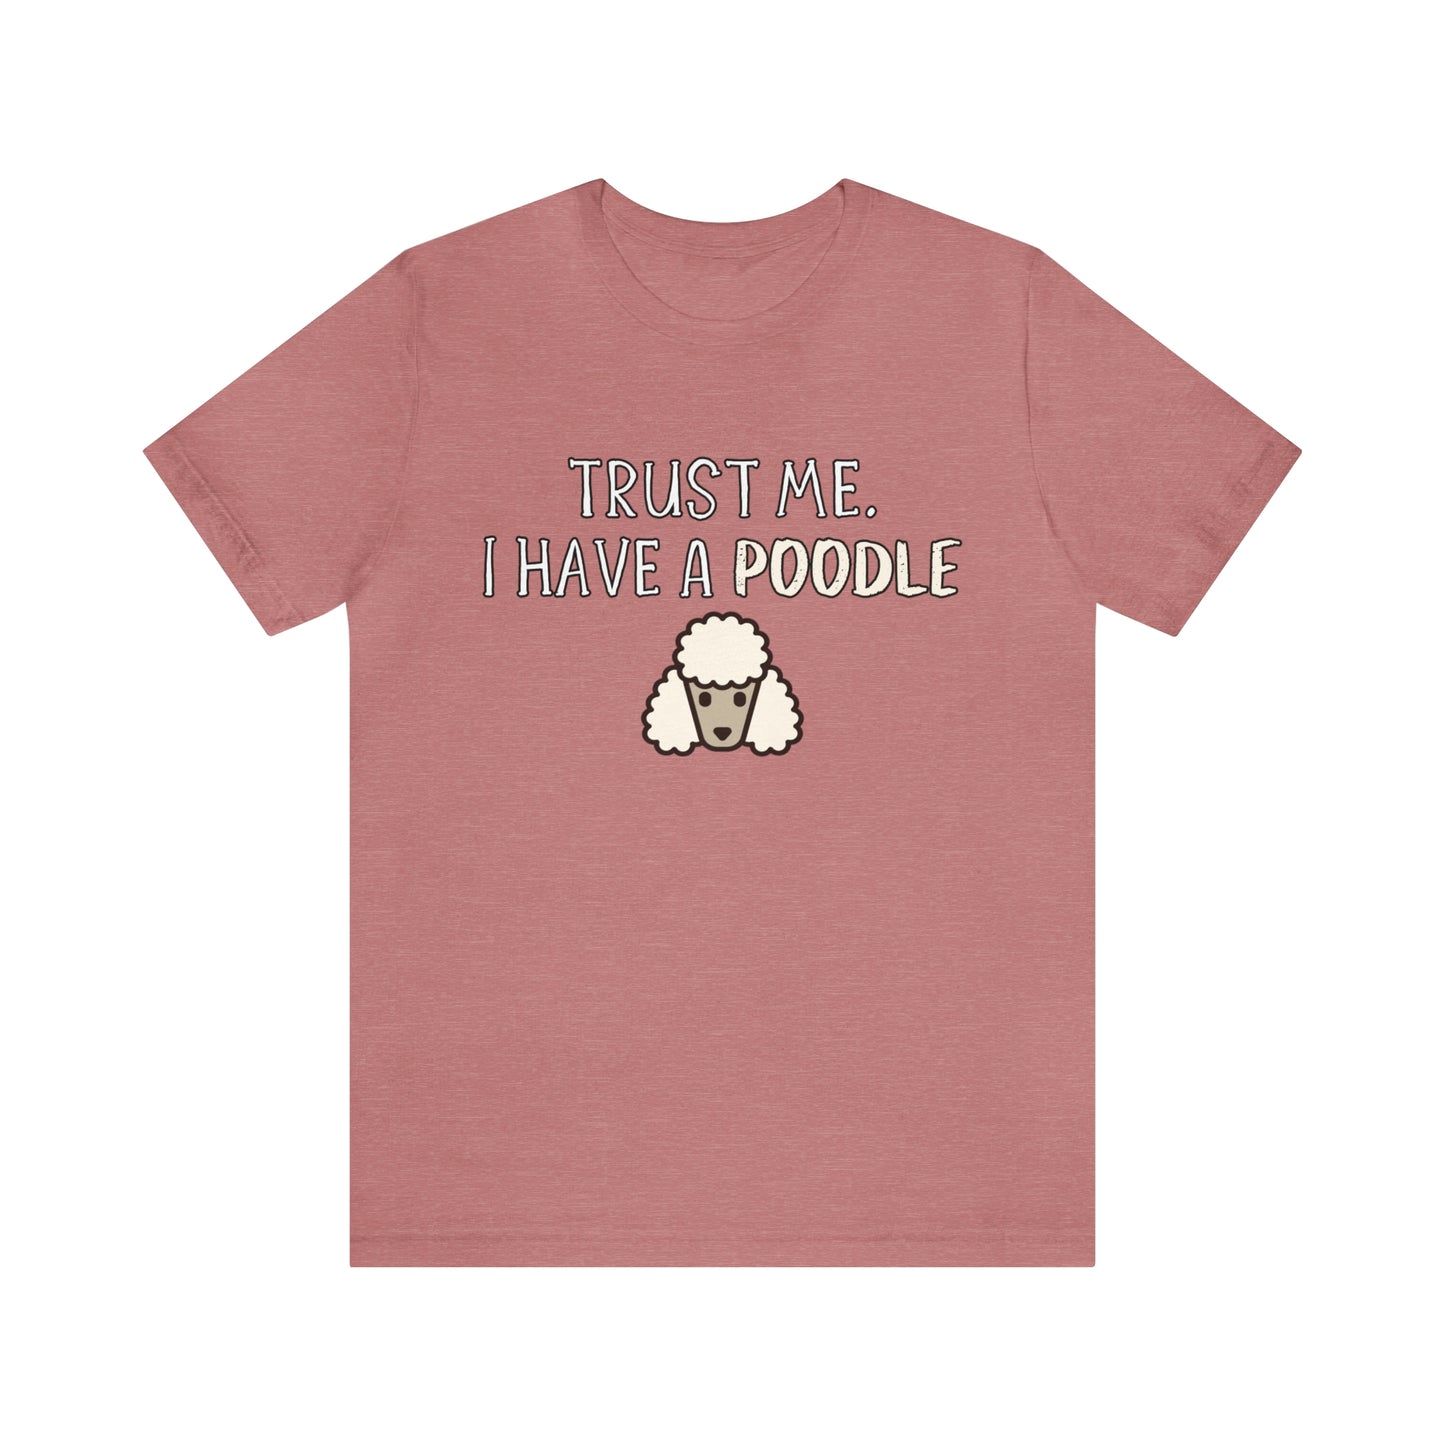 poodle t shirt pink